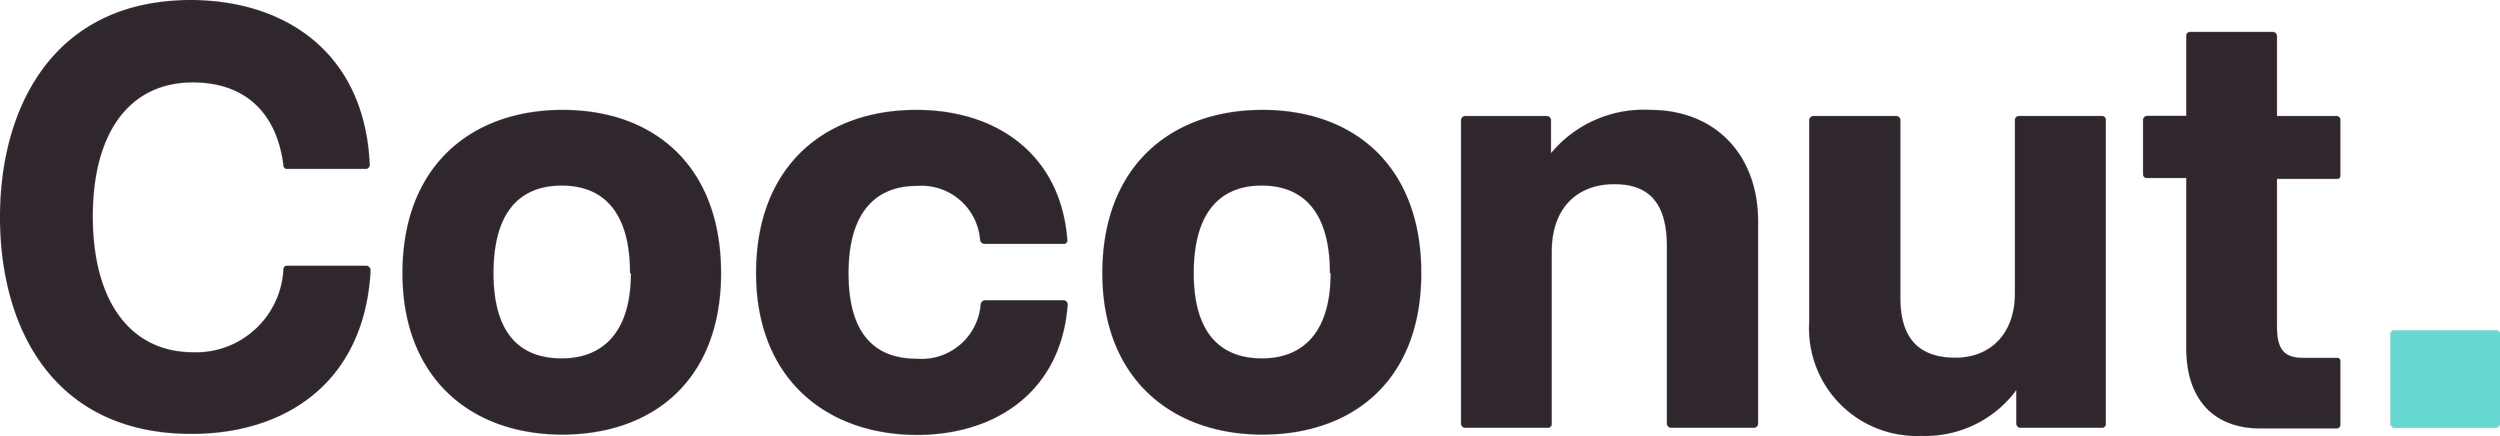 Coconut Logo - Dark.png